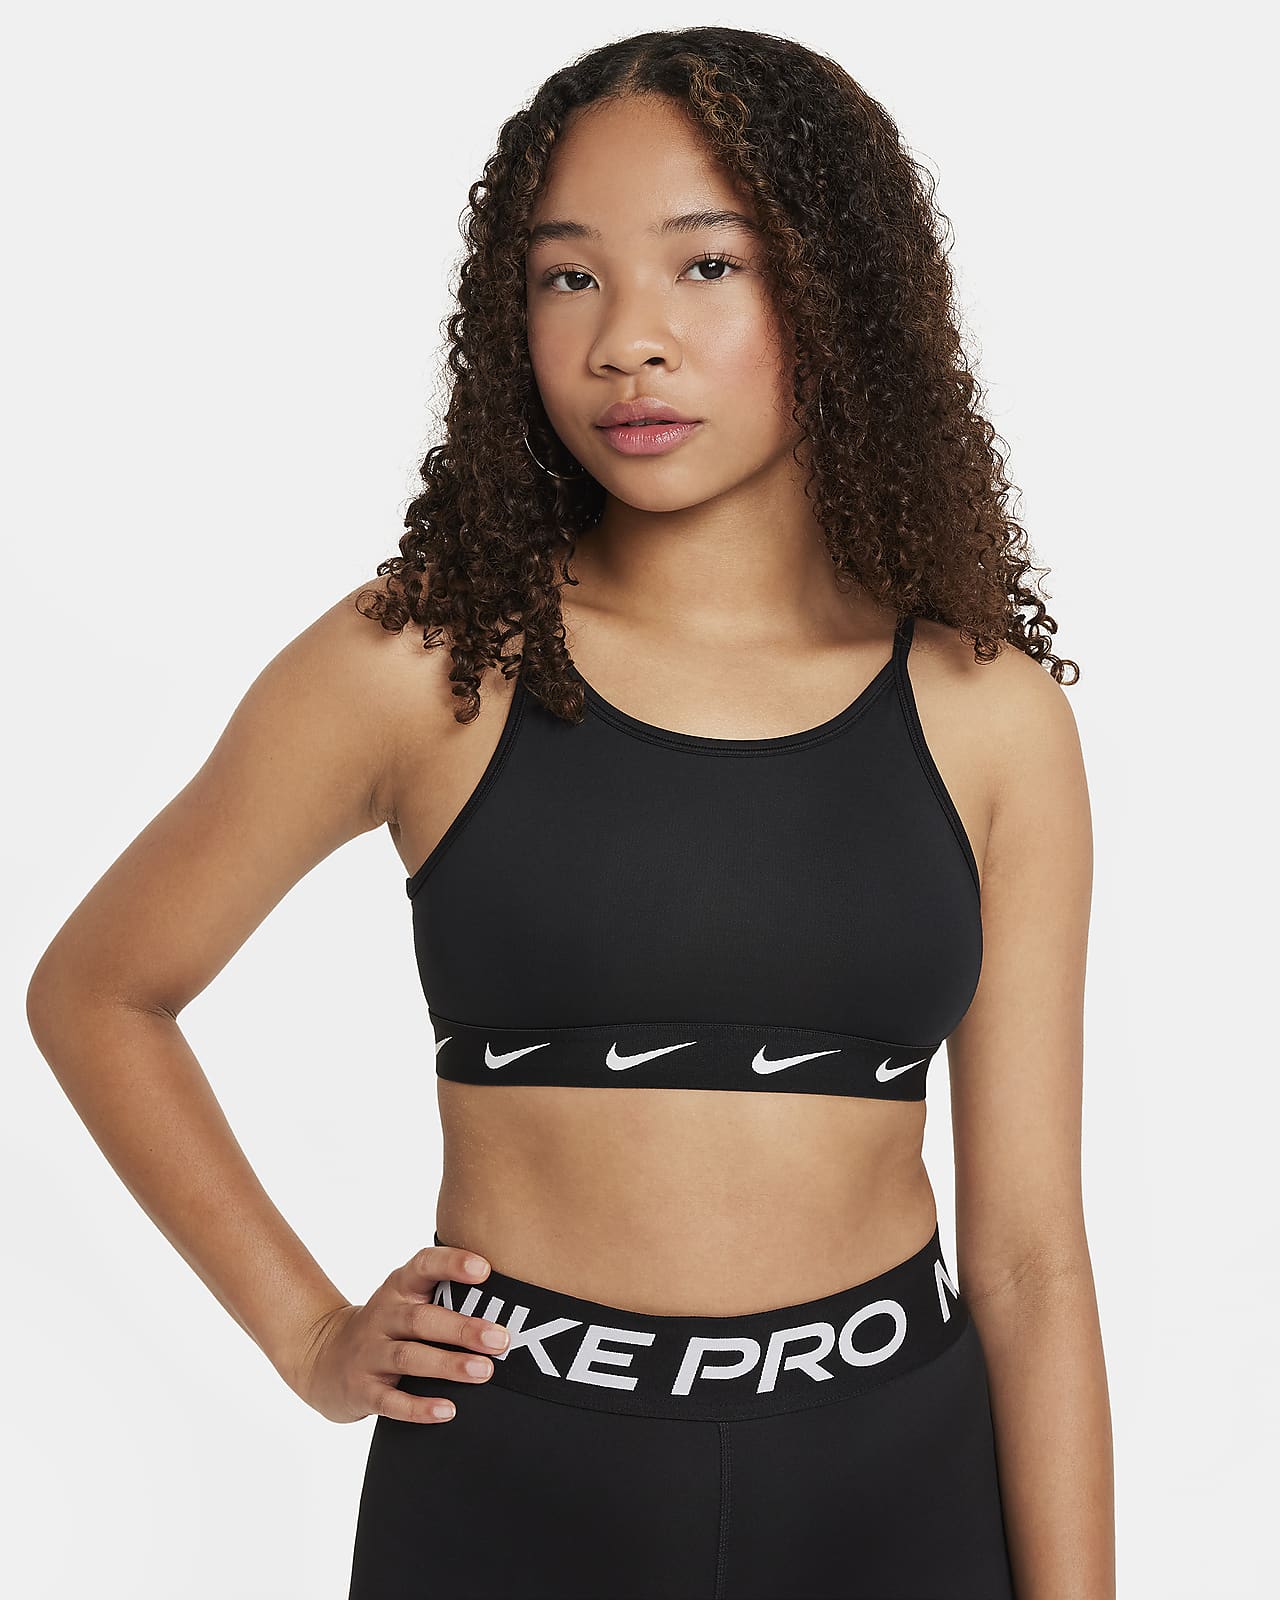 Girls Sports Bras. Nike PH